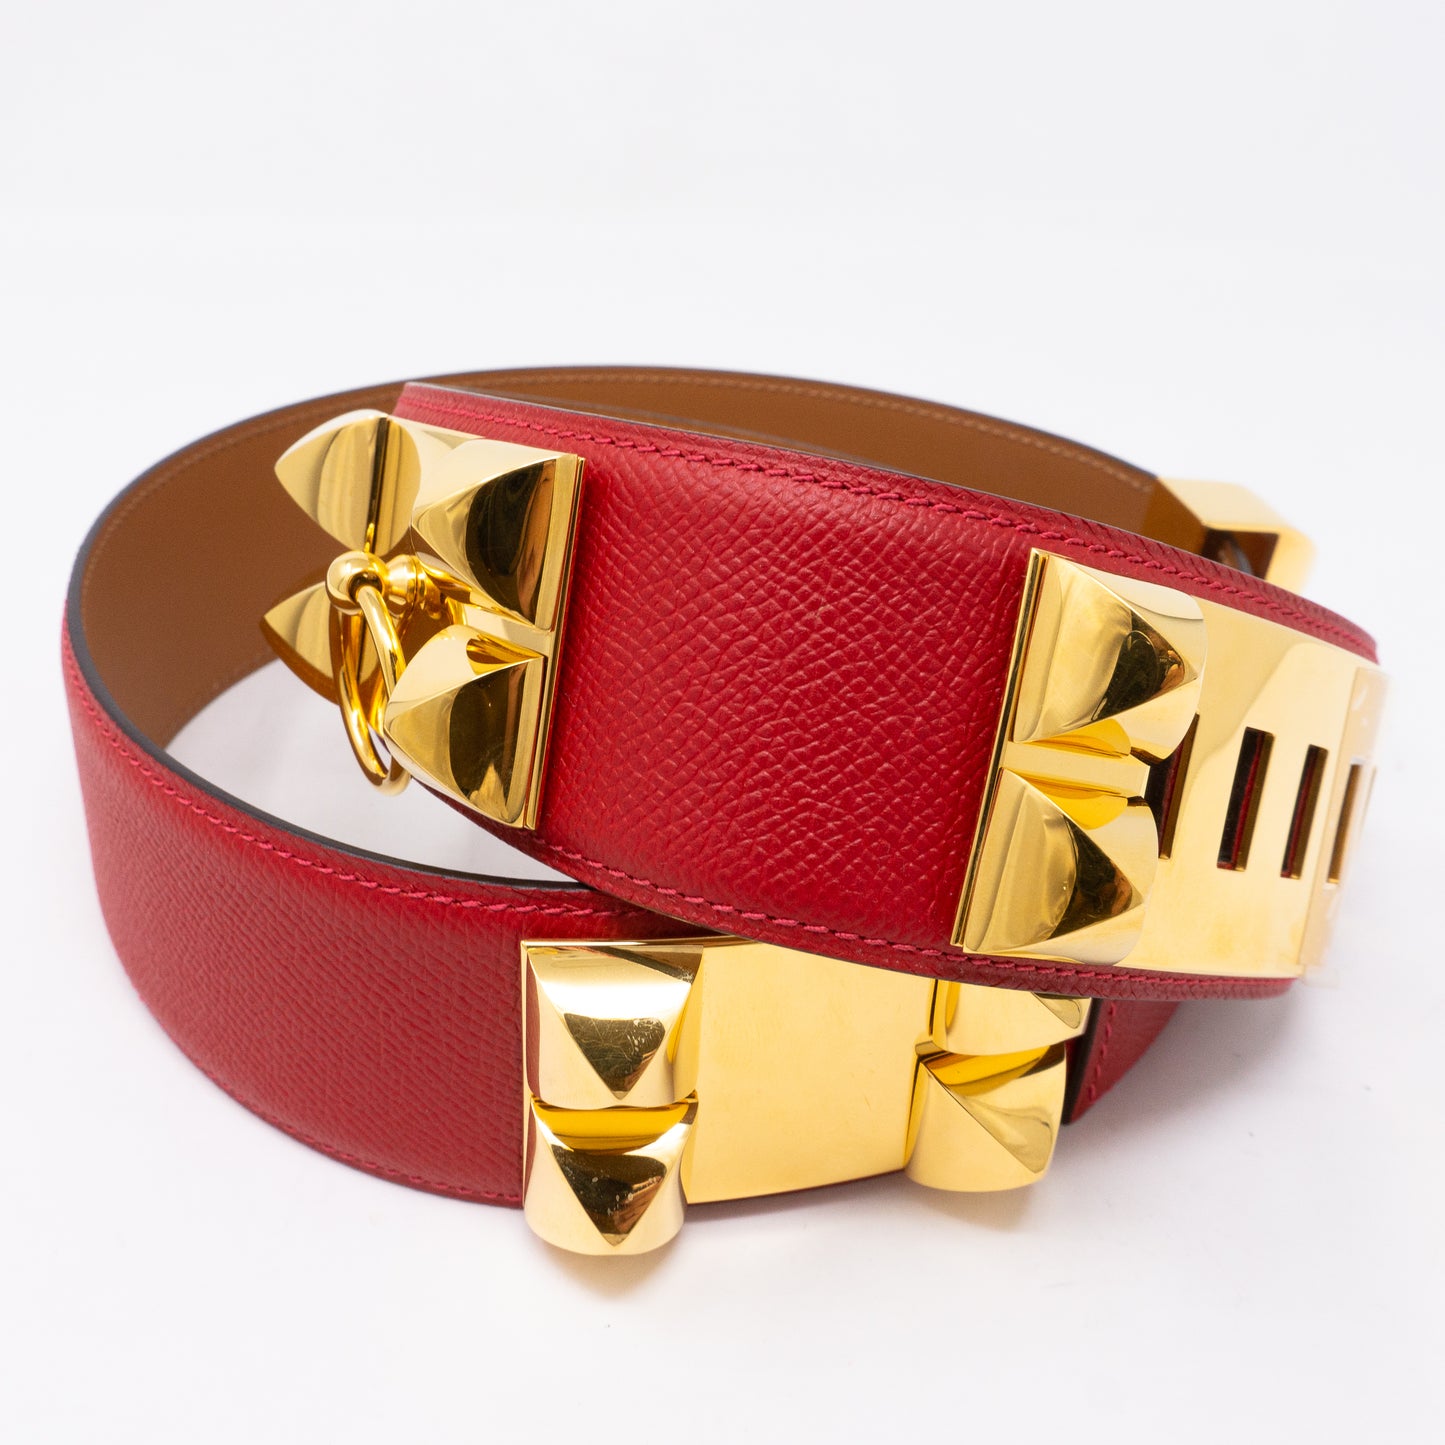 Collier de Chien Belt Red Leather